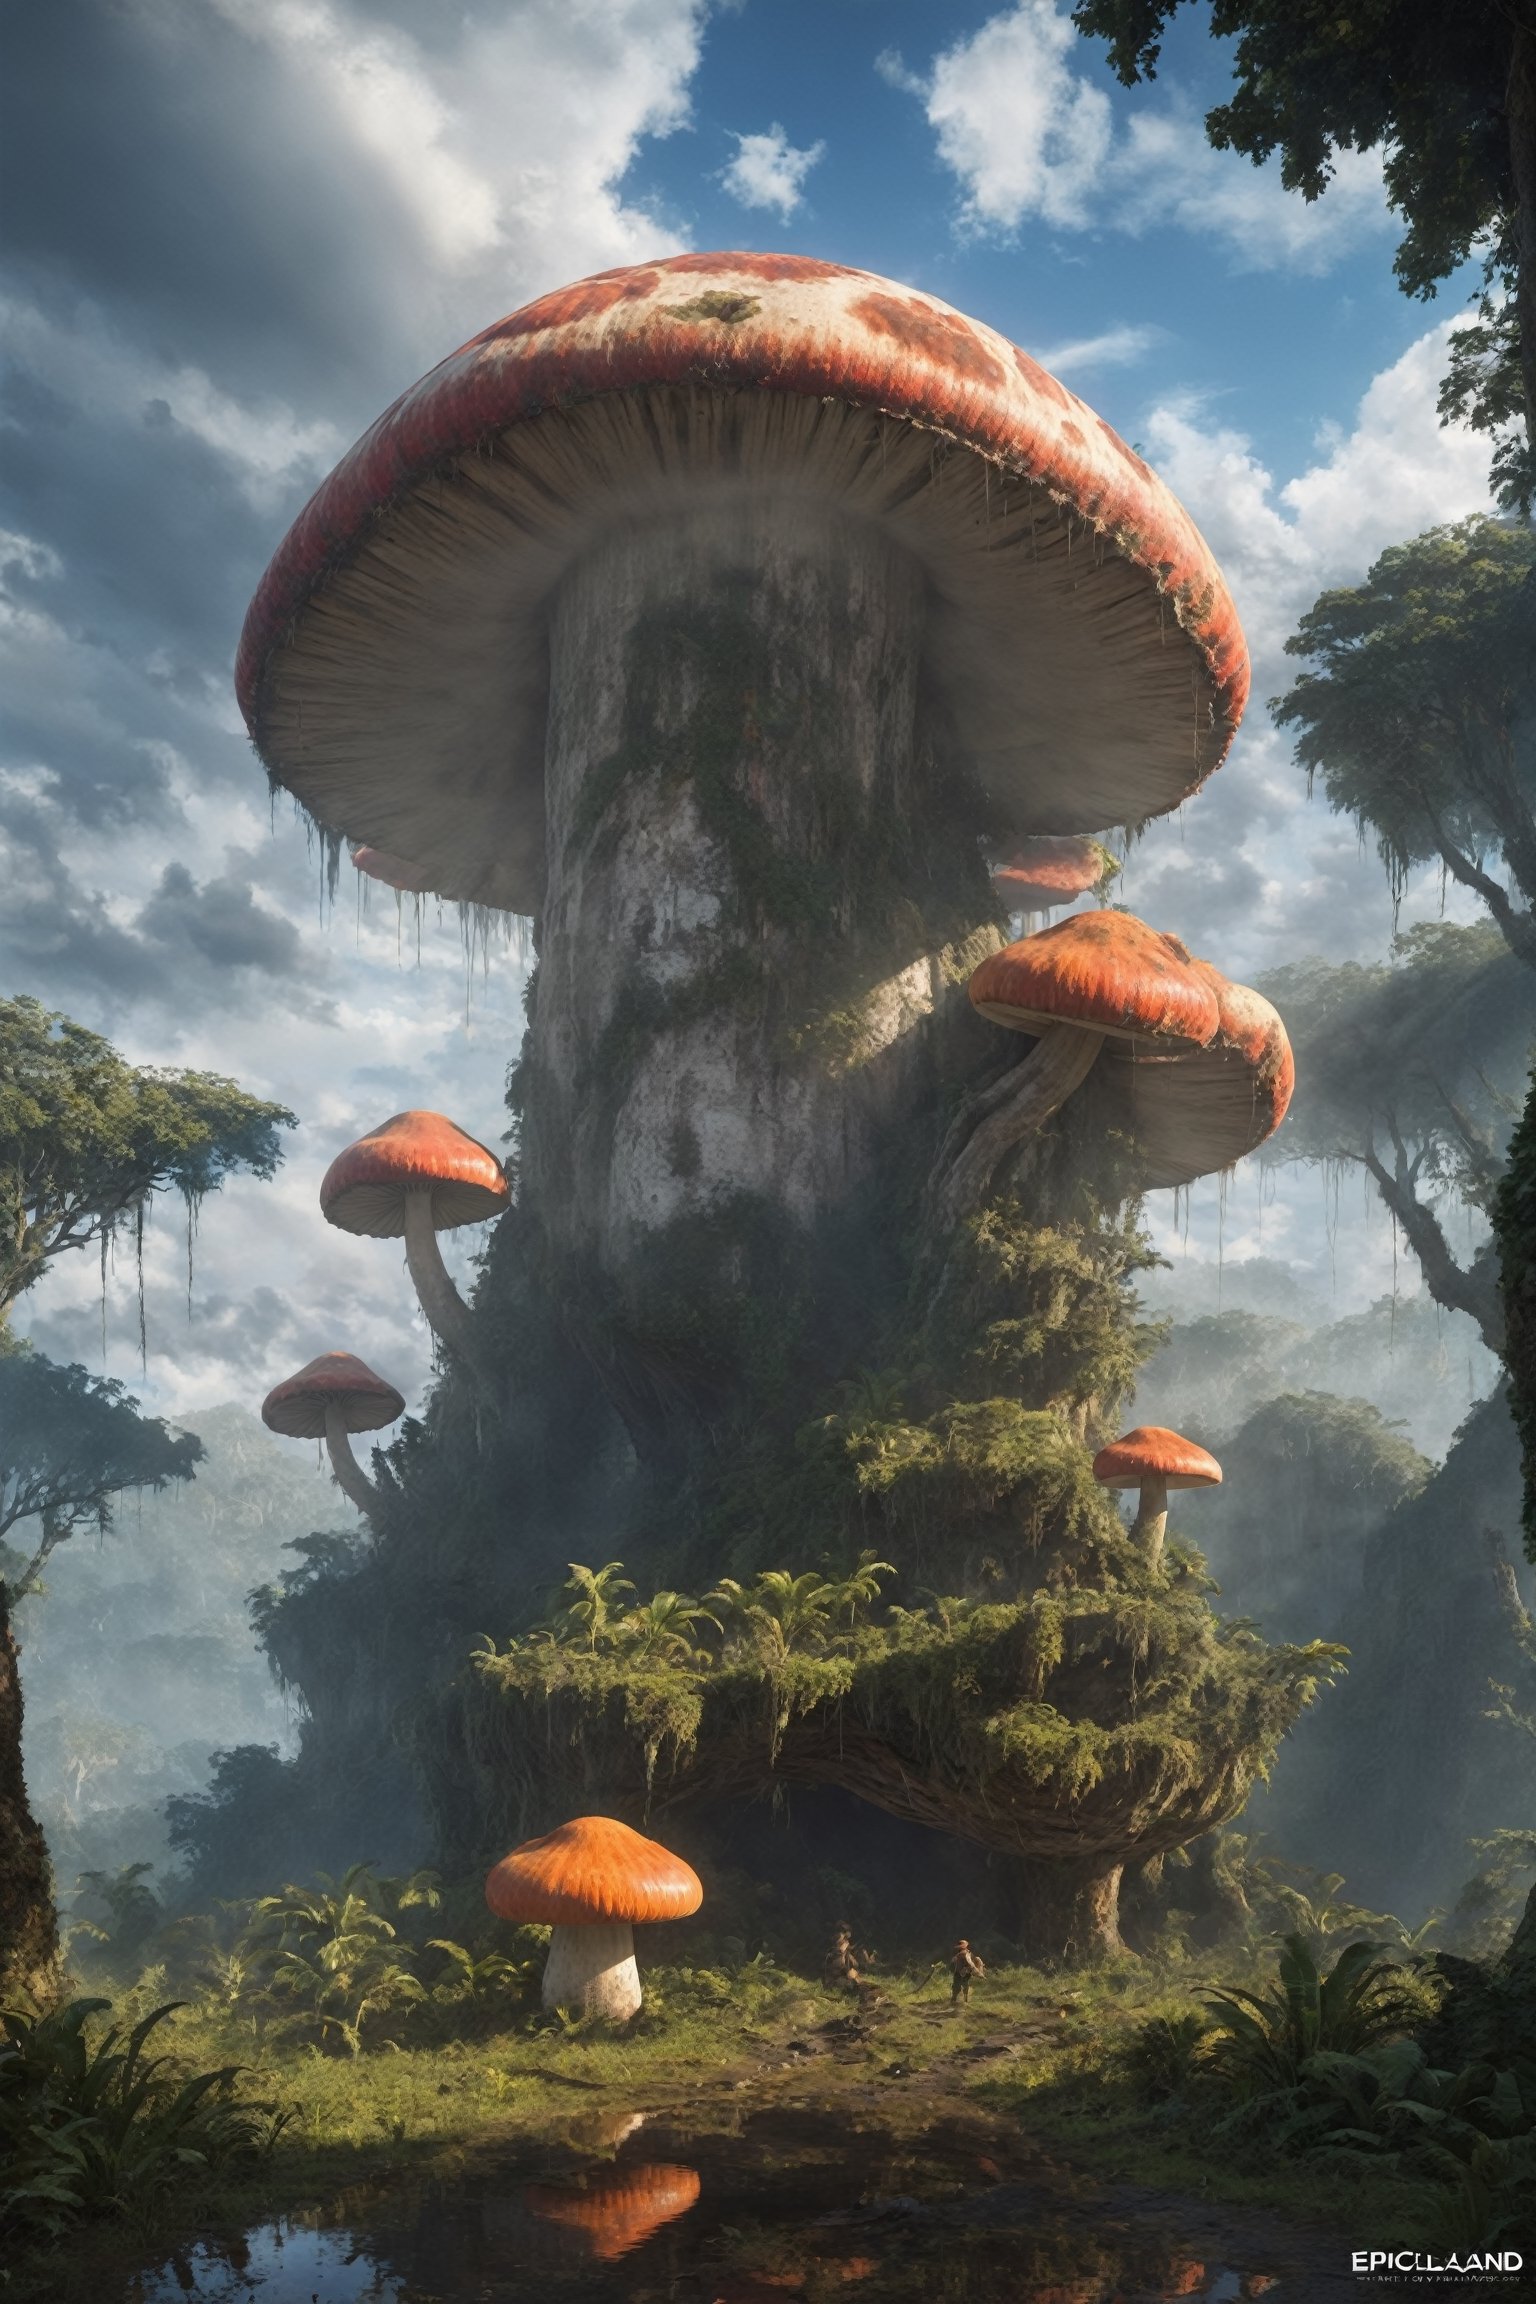 EpicLand,ruins,a giant mushroom, jungle, puddle, trees, animals, cloud sky, epic light